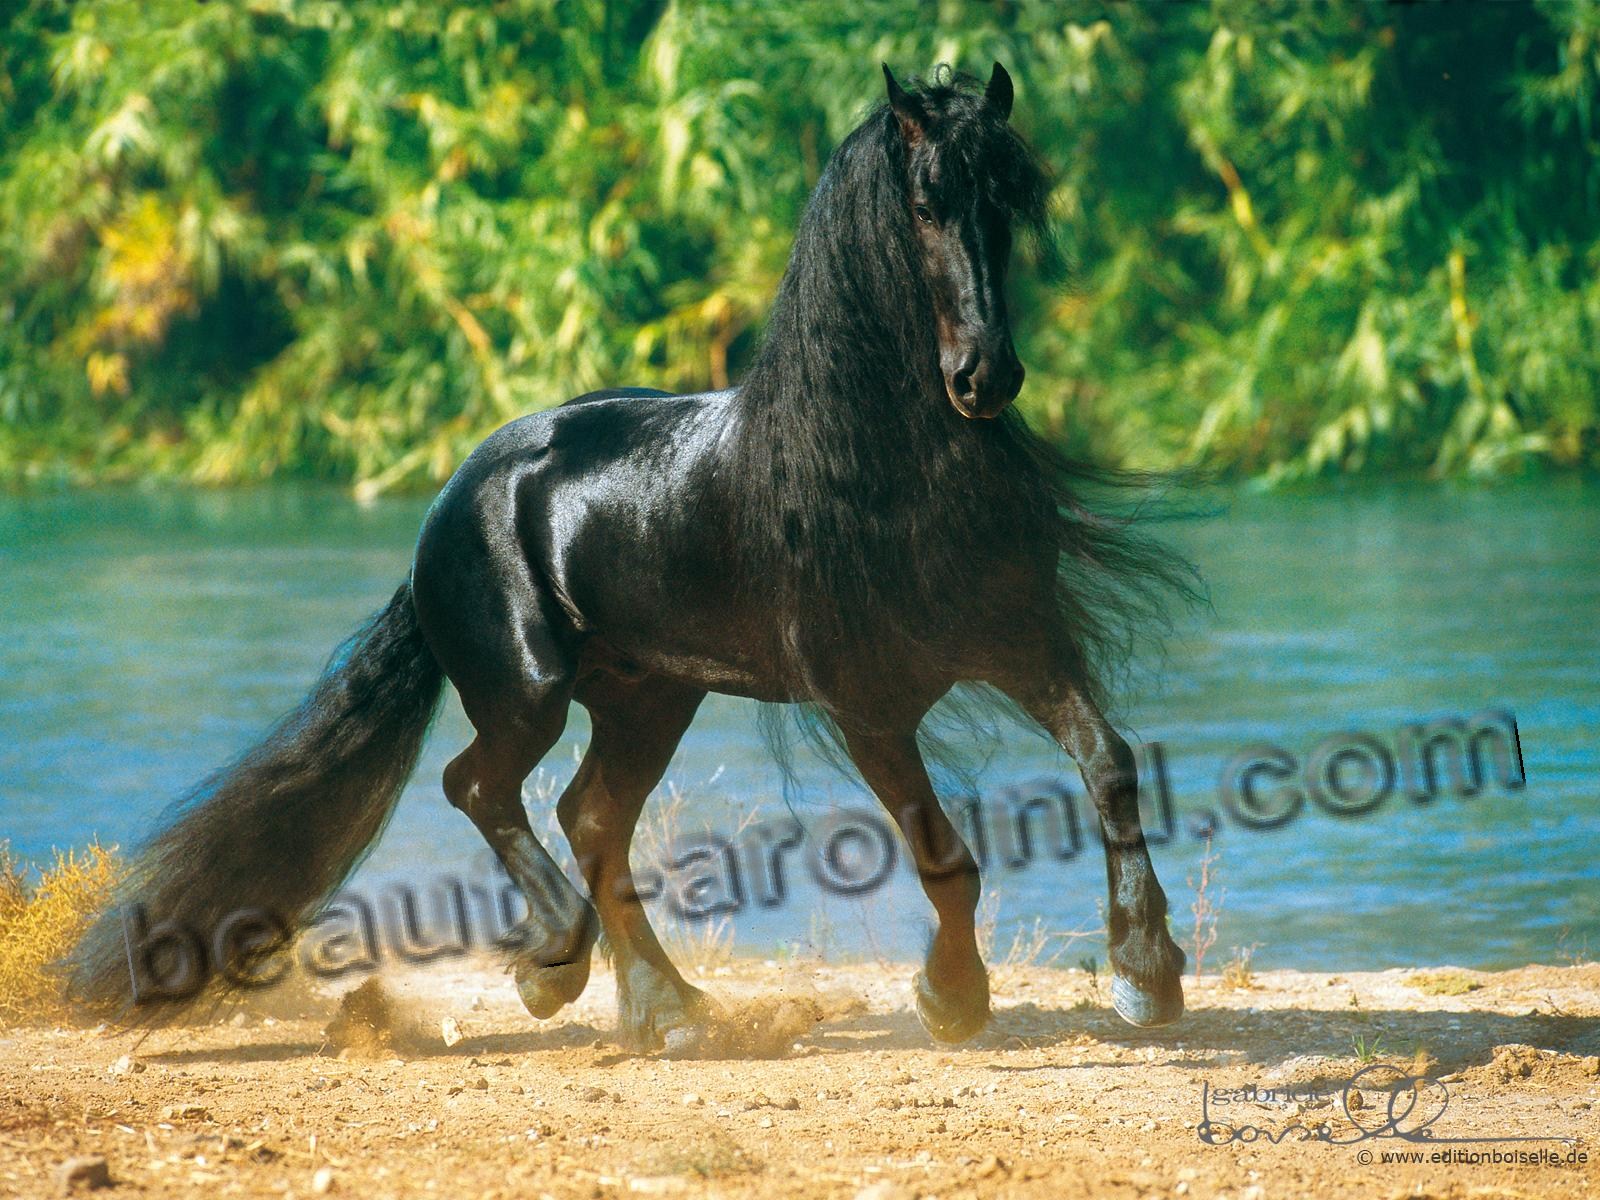 Friesian horse most beautiful horse breeds photos